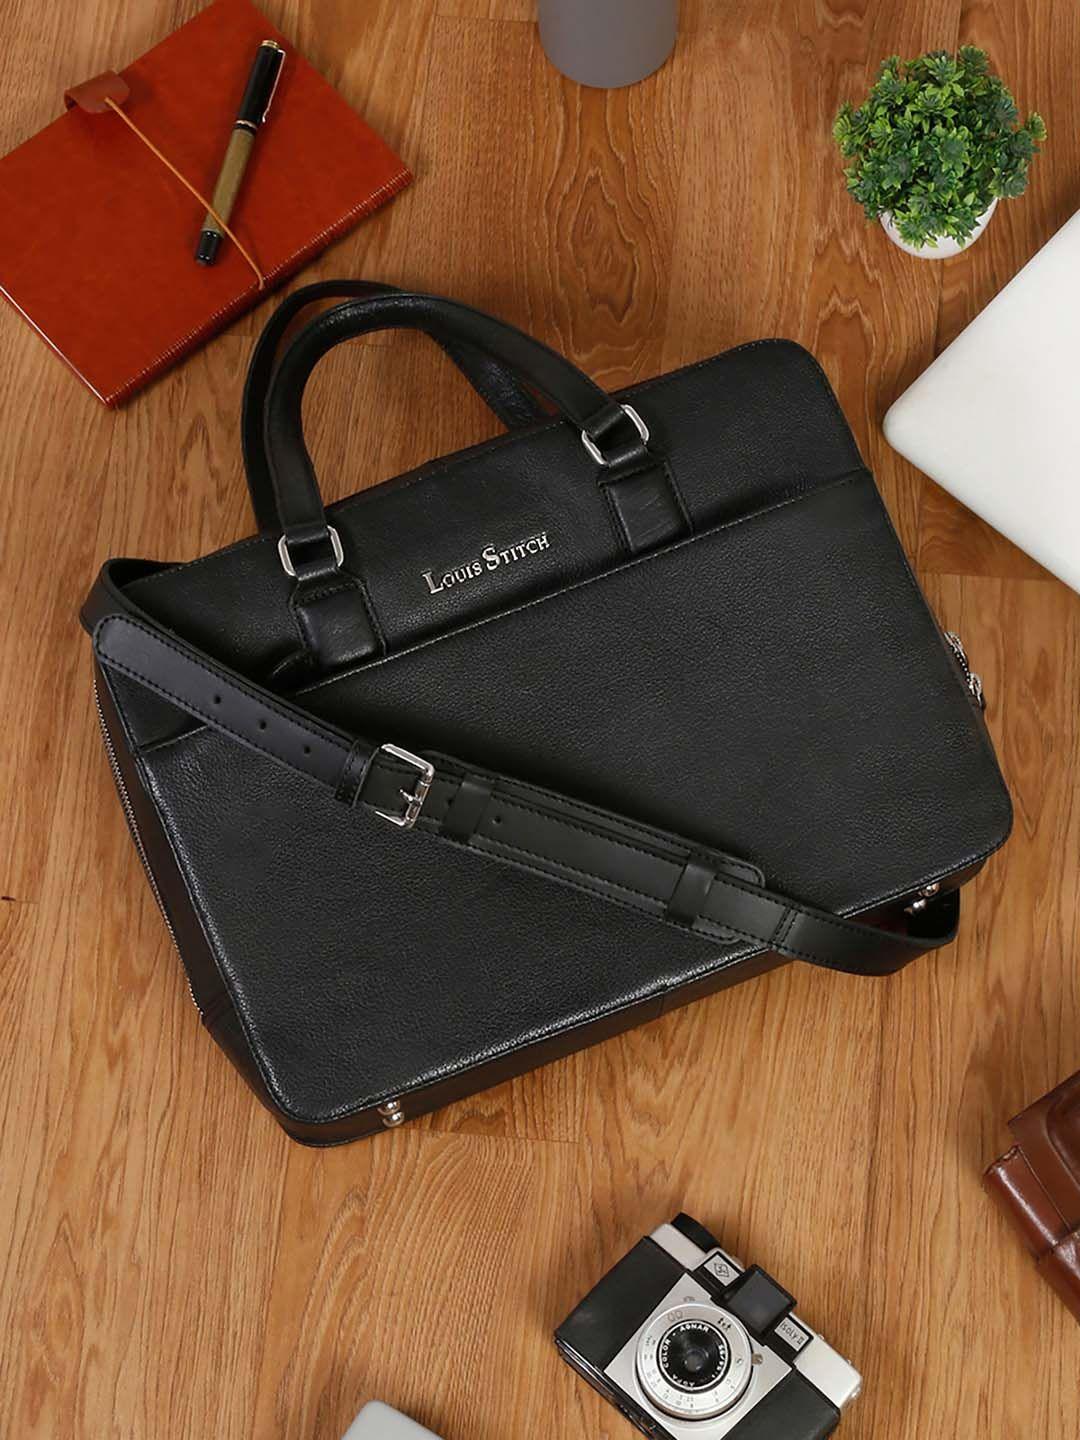 louis stitch unisex textured leather laptop bag